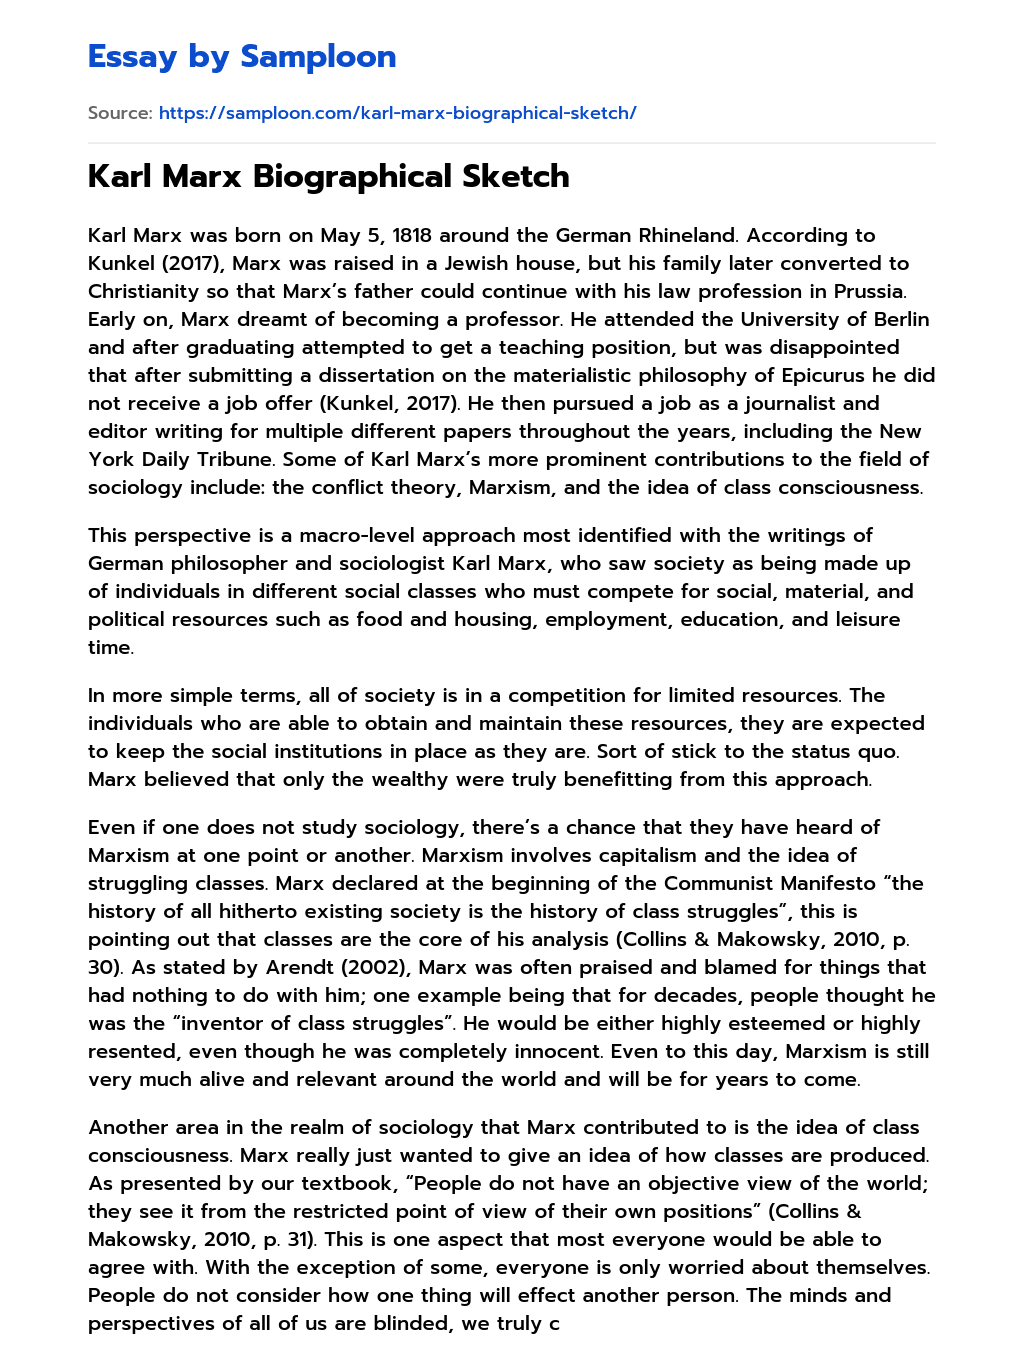 Karl Marx Biographical Sketch essay